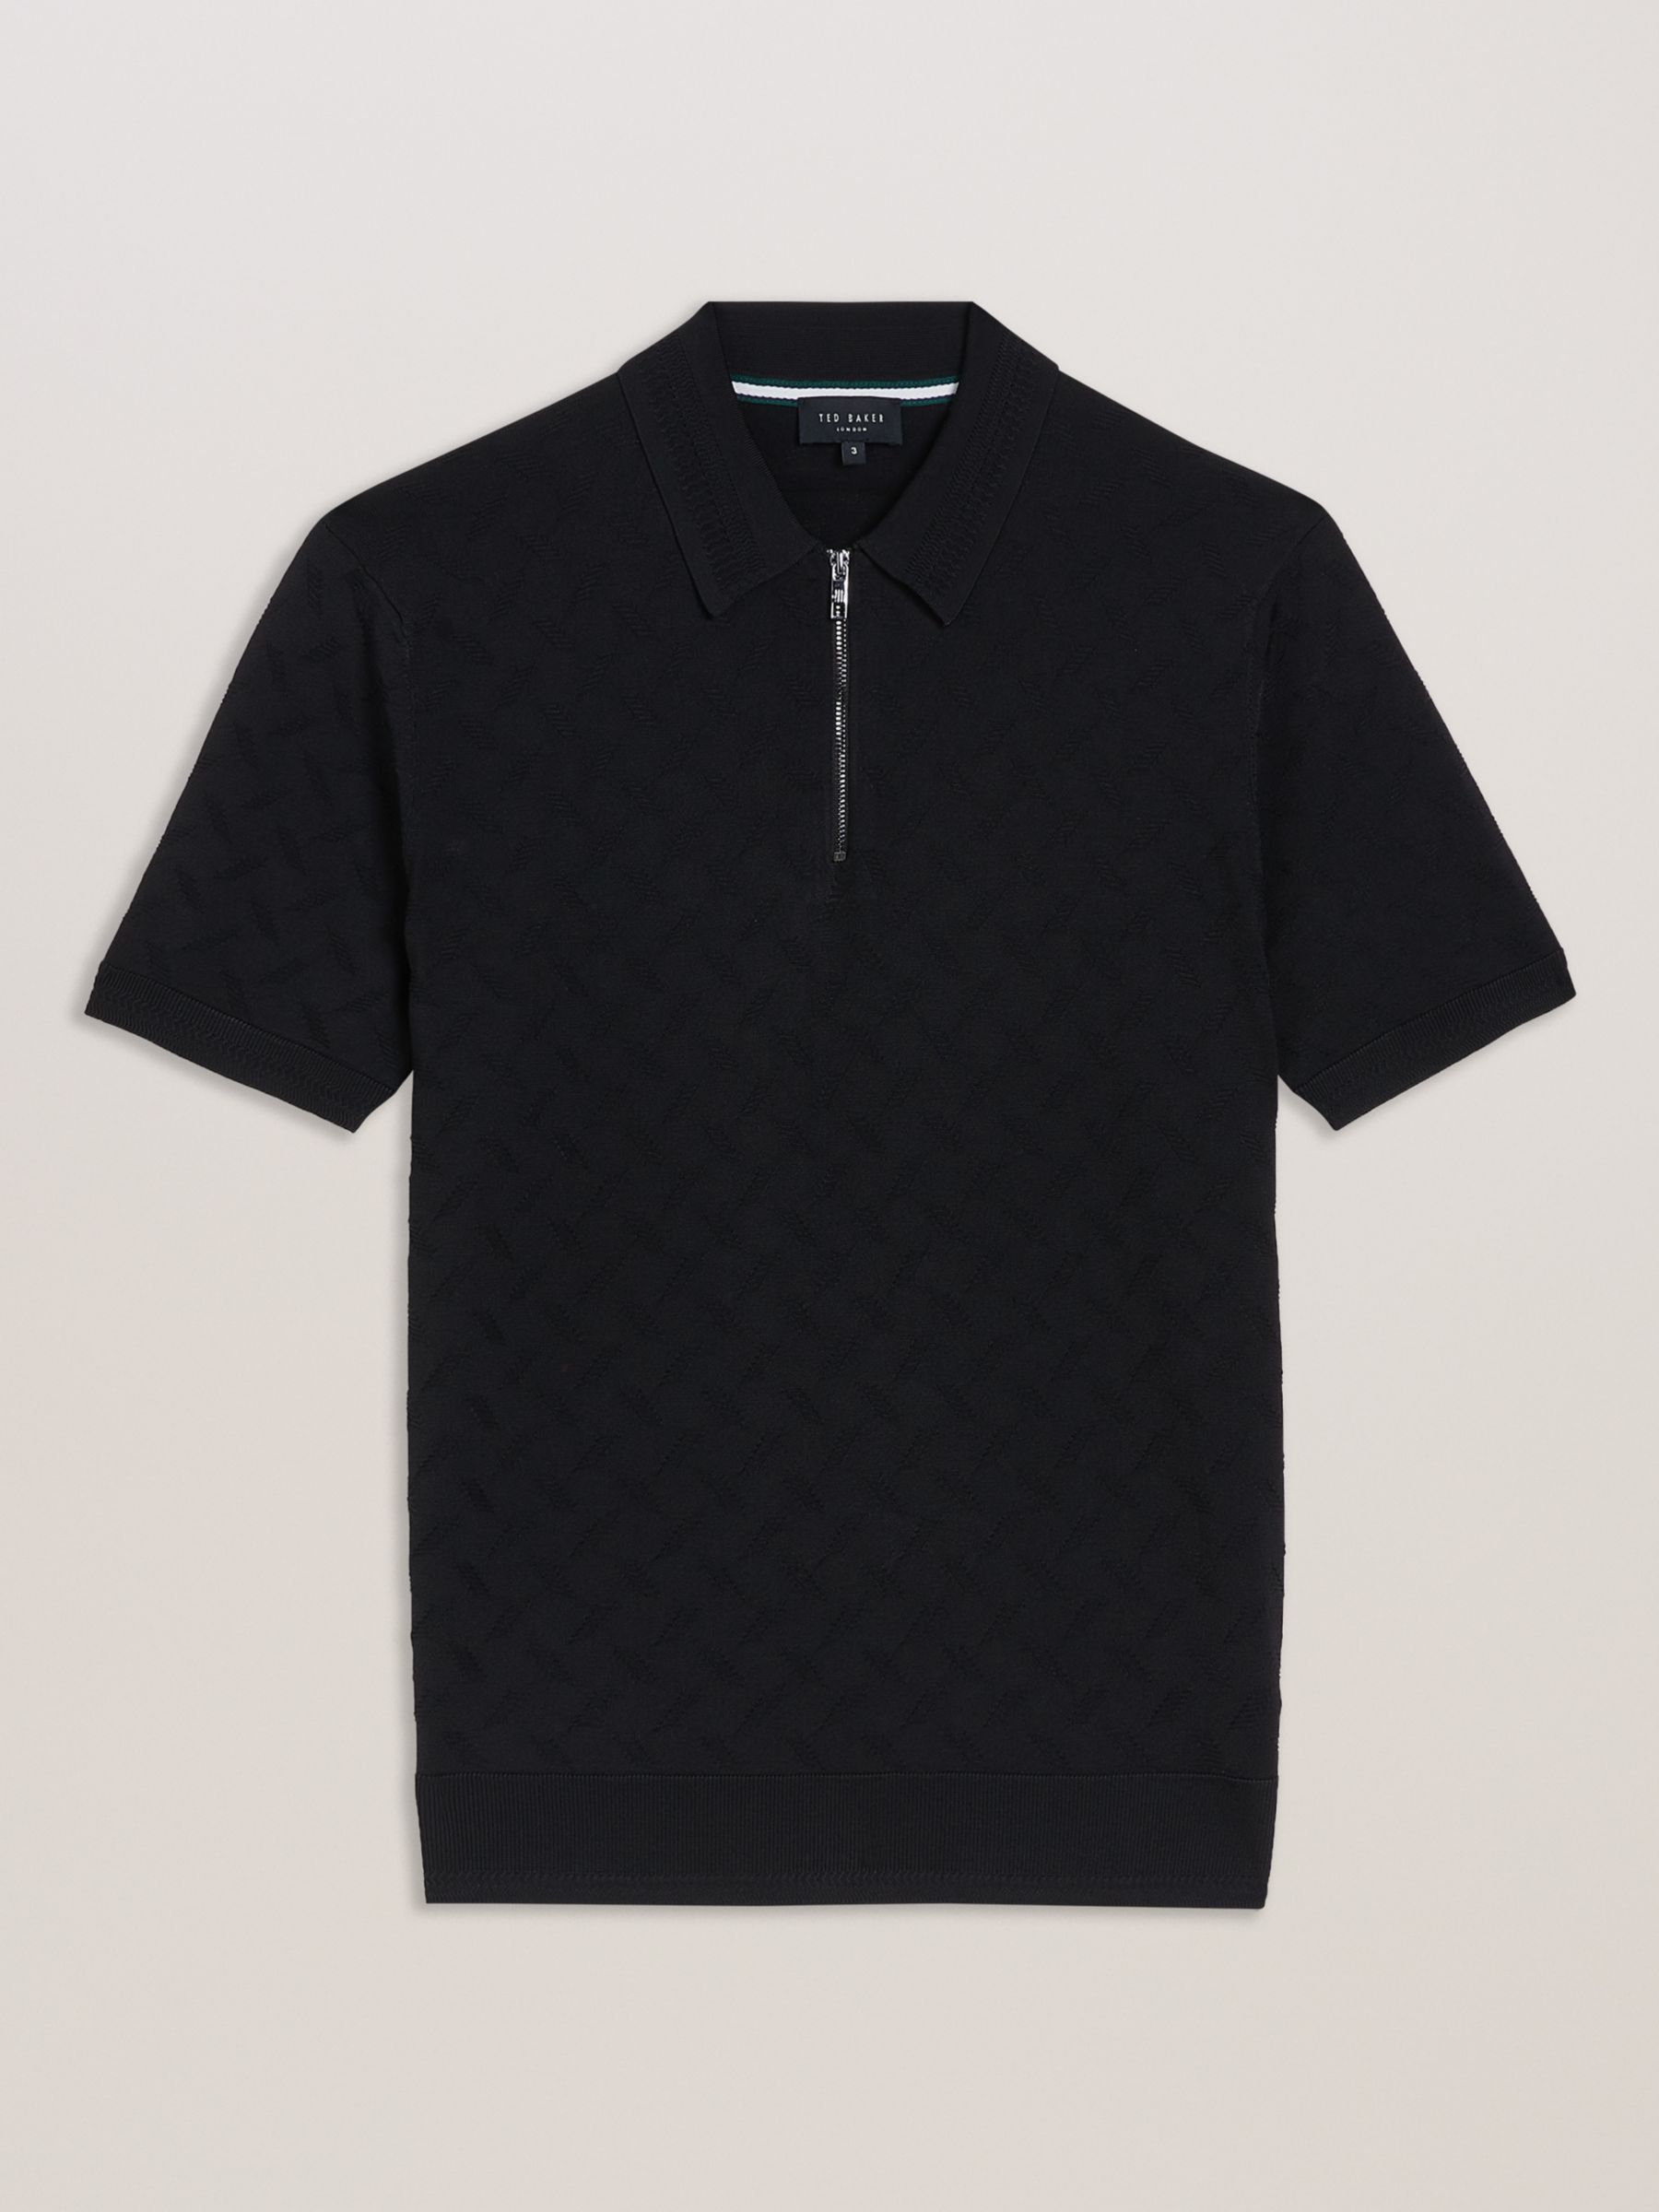 Ted Baker Palton Textured Zipped Polo Shirt, Black at John Lewis & Partners